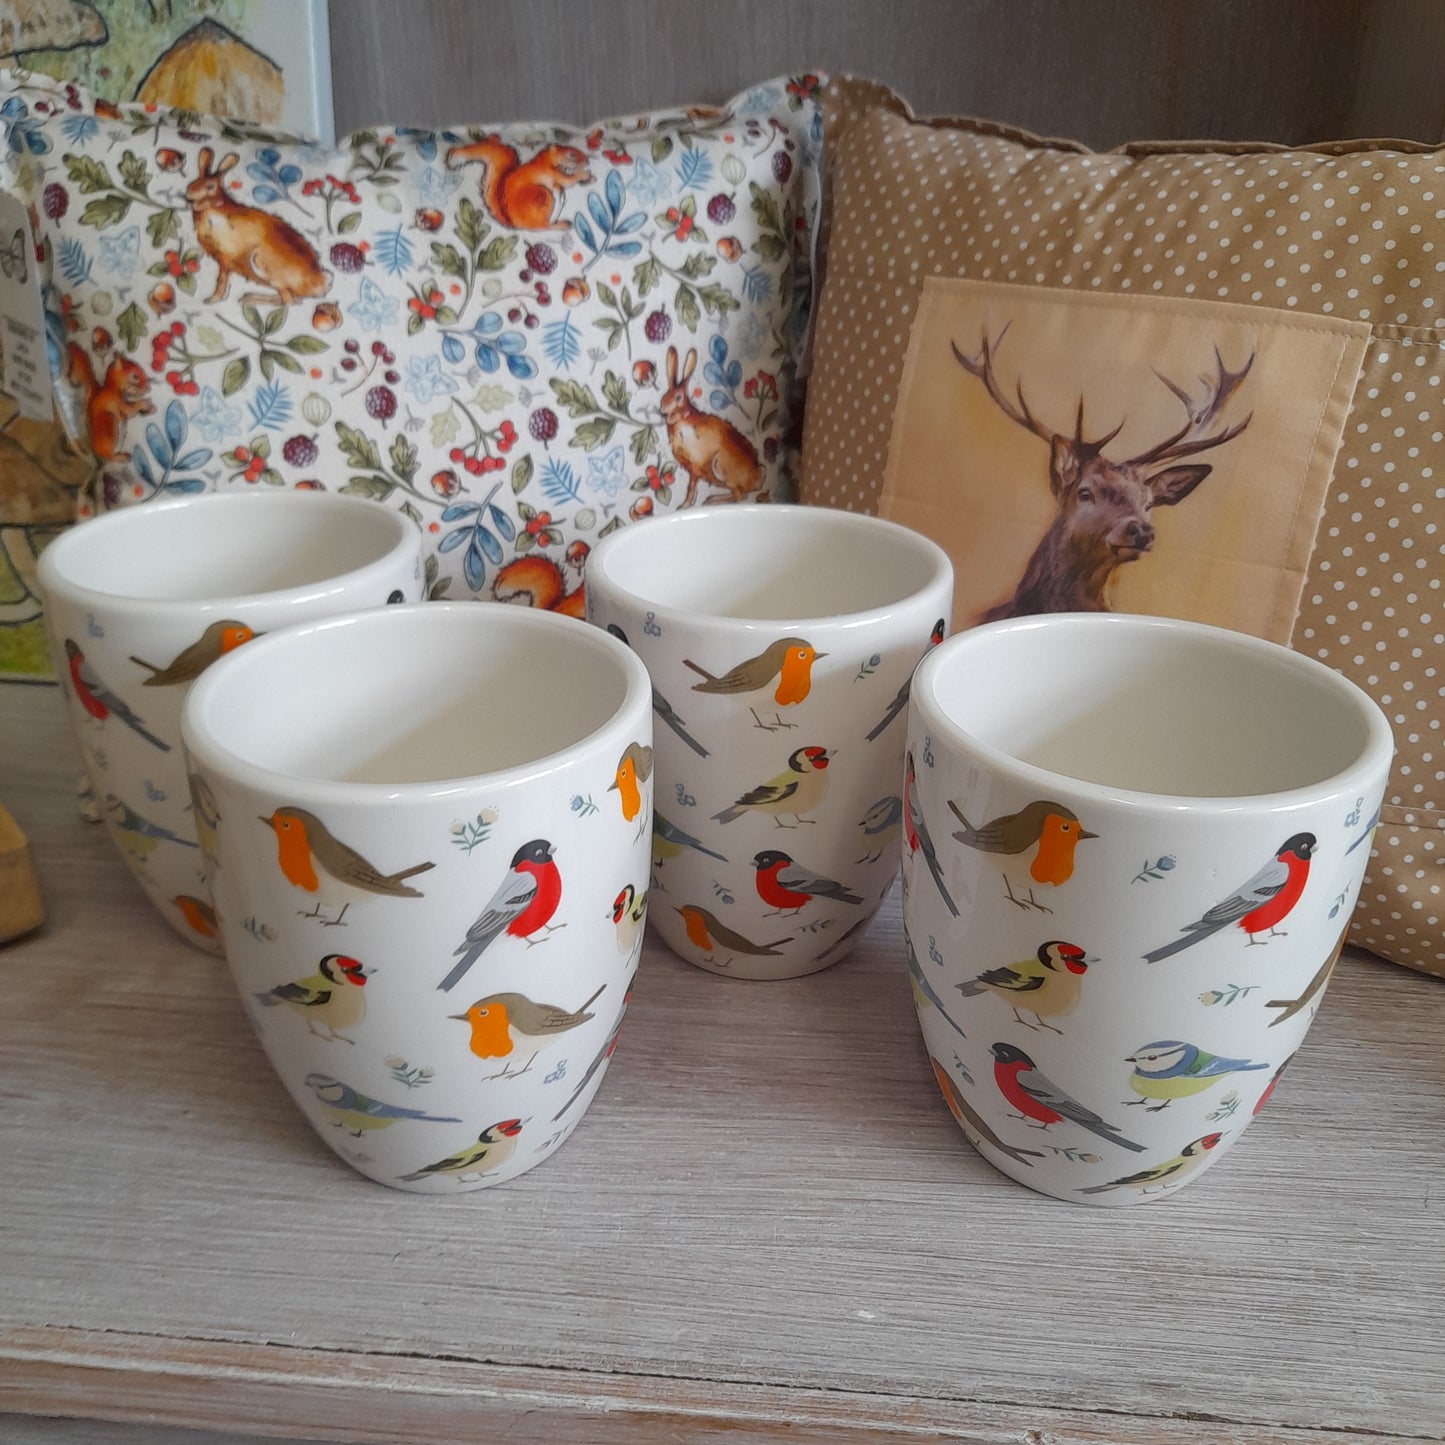 British bird pots